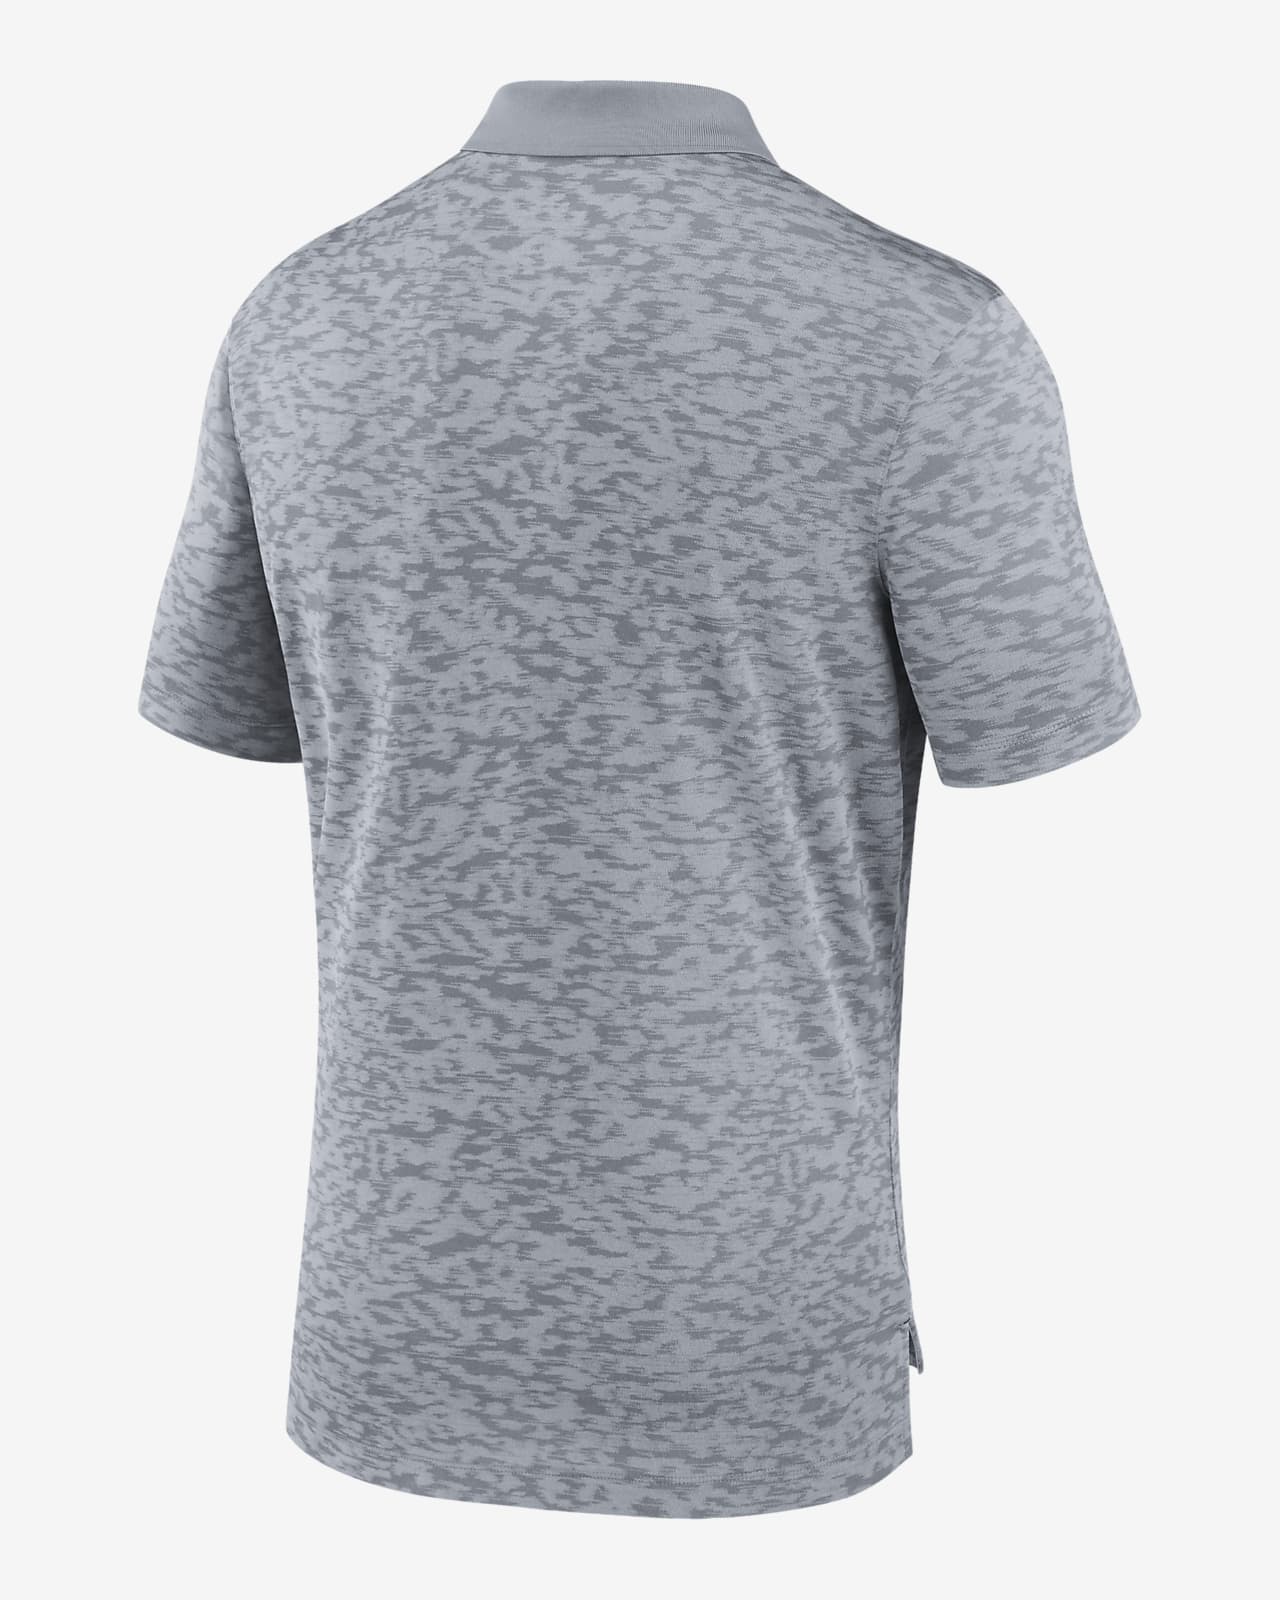 Chicago White Sox Camo Logo Men's Nike MLB T-Shirt.